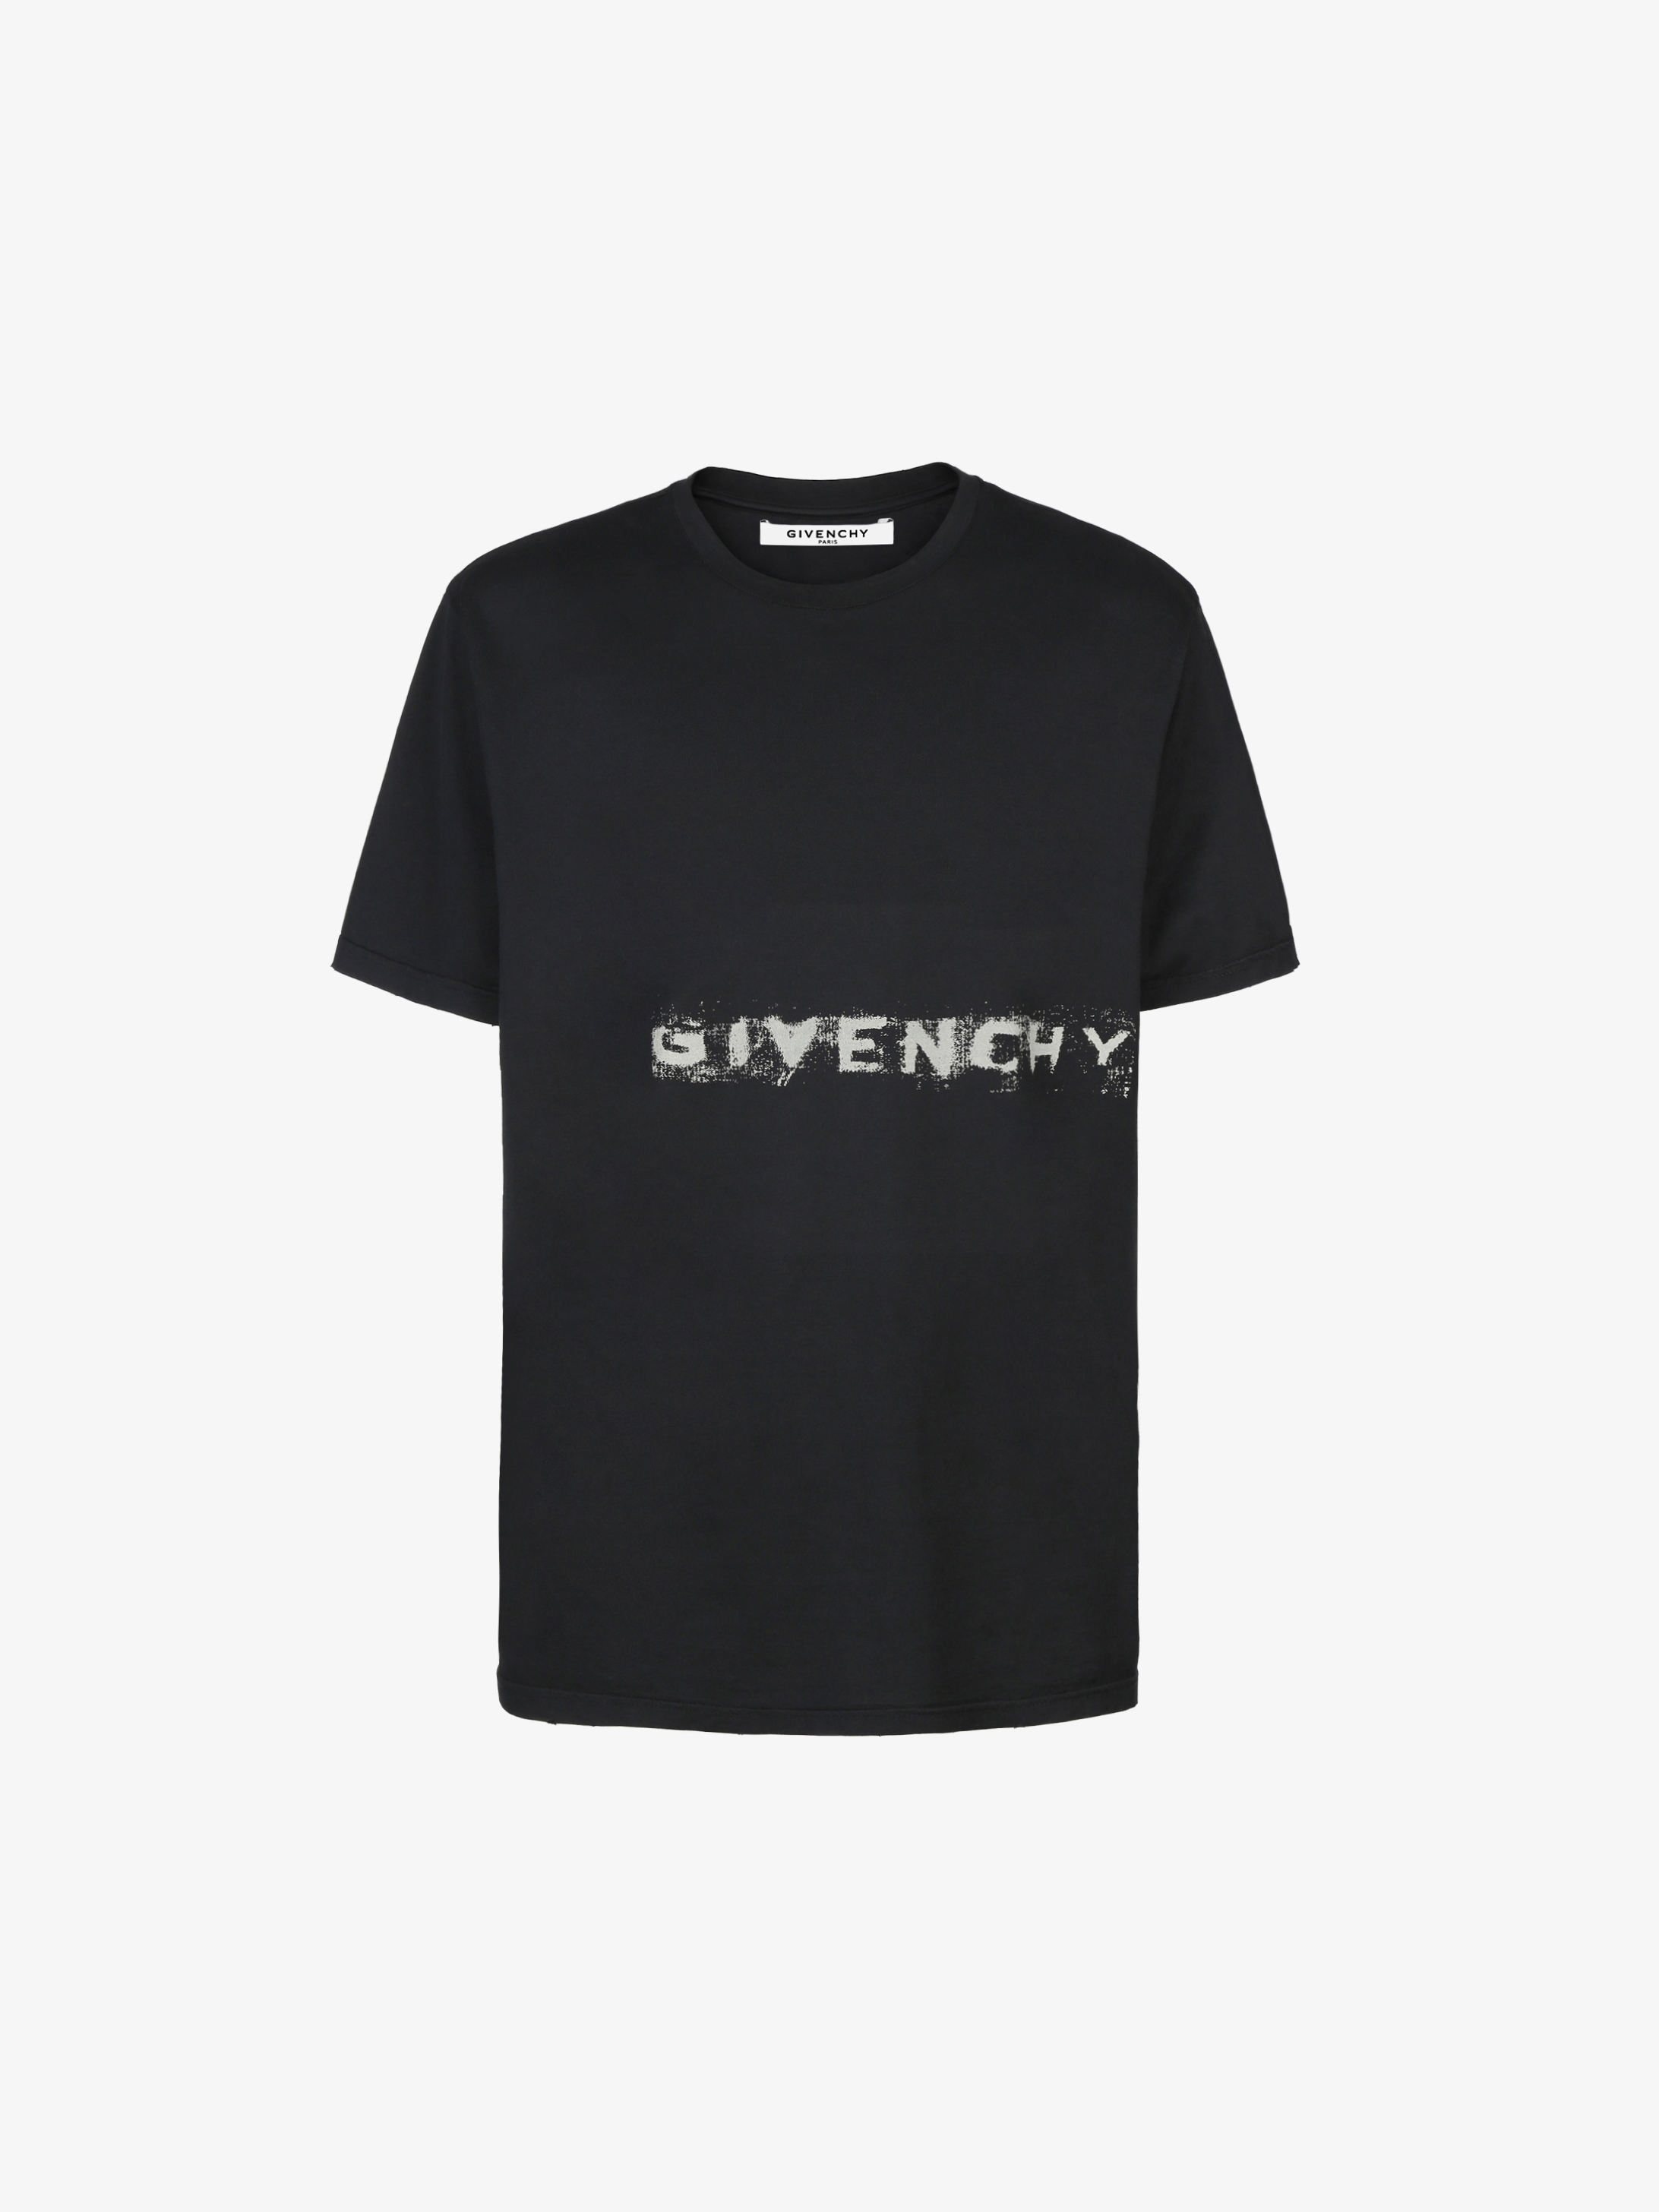 Givenchy Black Faded Logo T-Shirt - Rogue